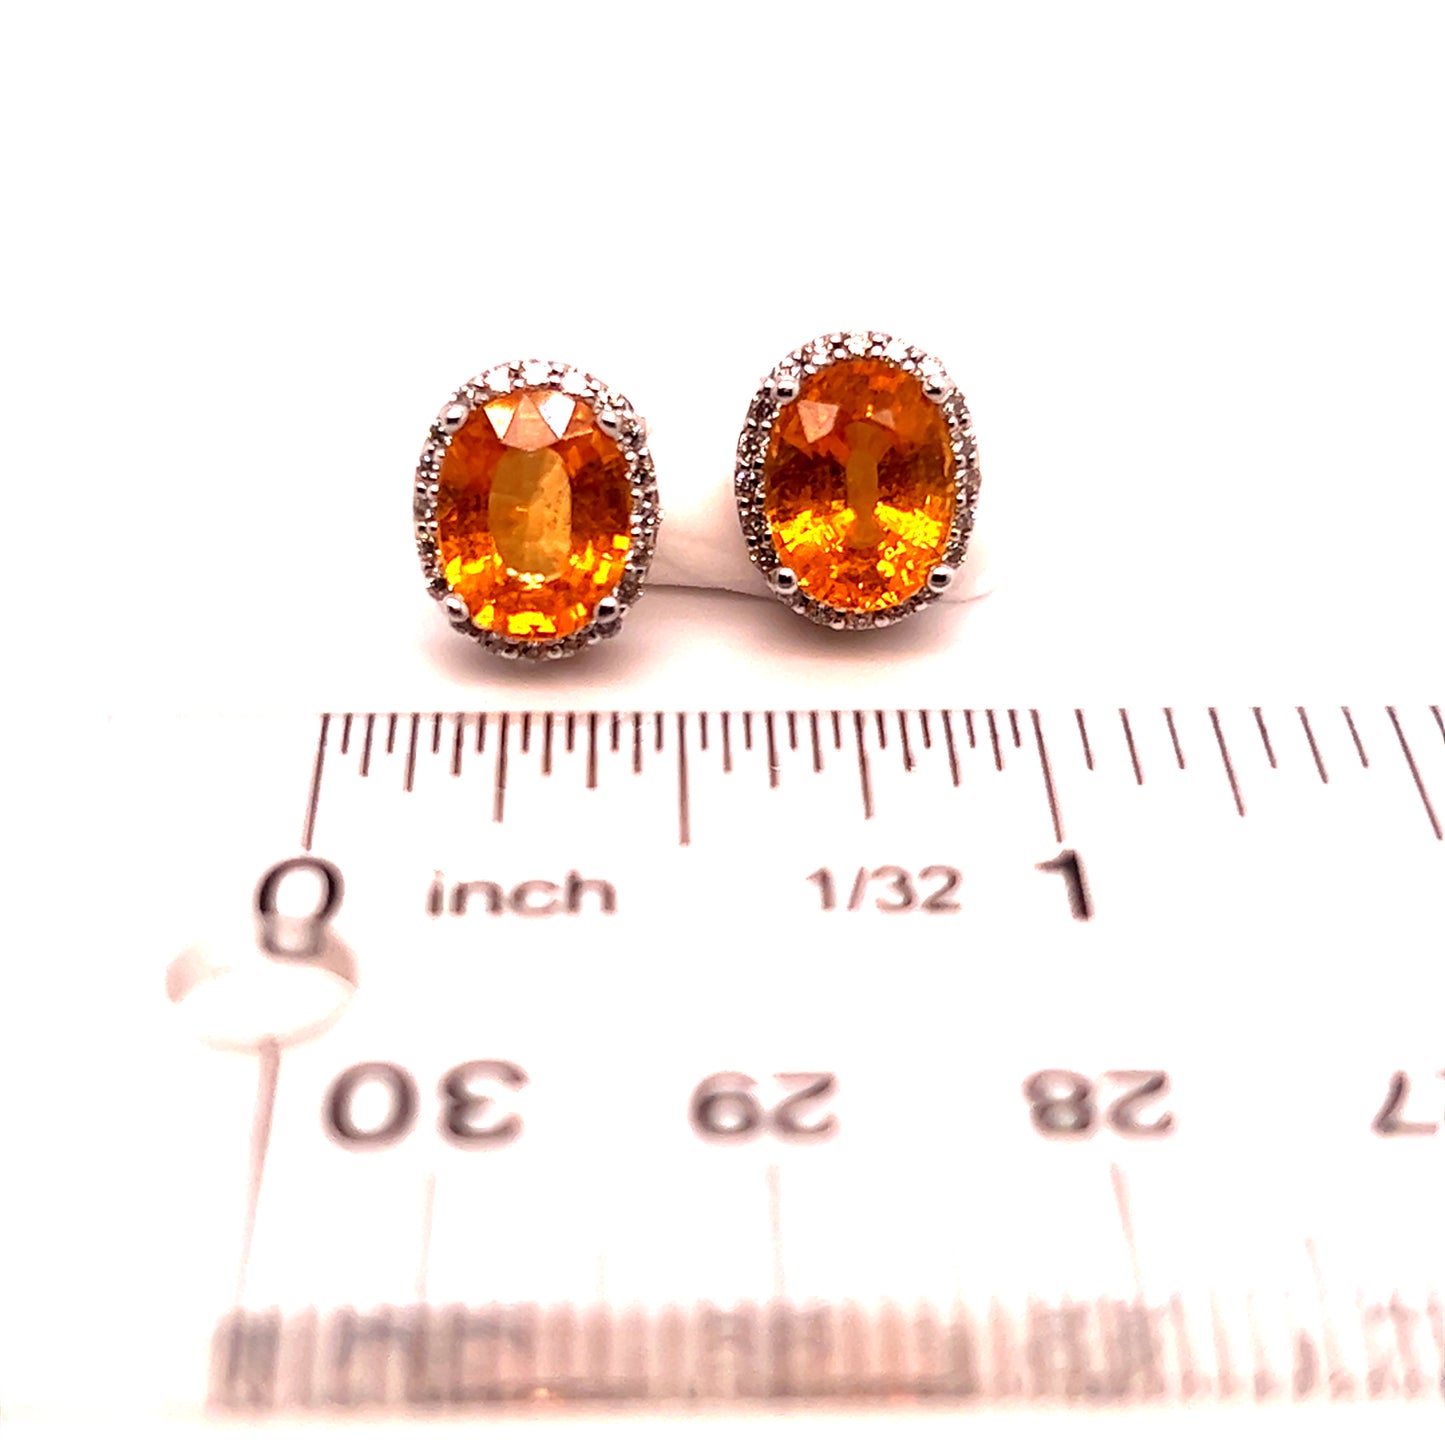 Natural Sapphire Diamond Stud Earrings 14k W Gold 4.98 TCW Certified $4,950 121266 - Certified Estate Jewelry